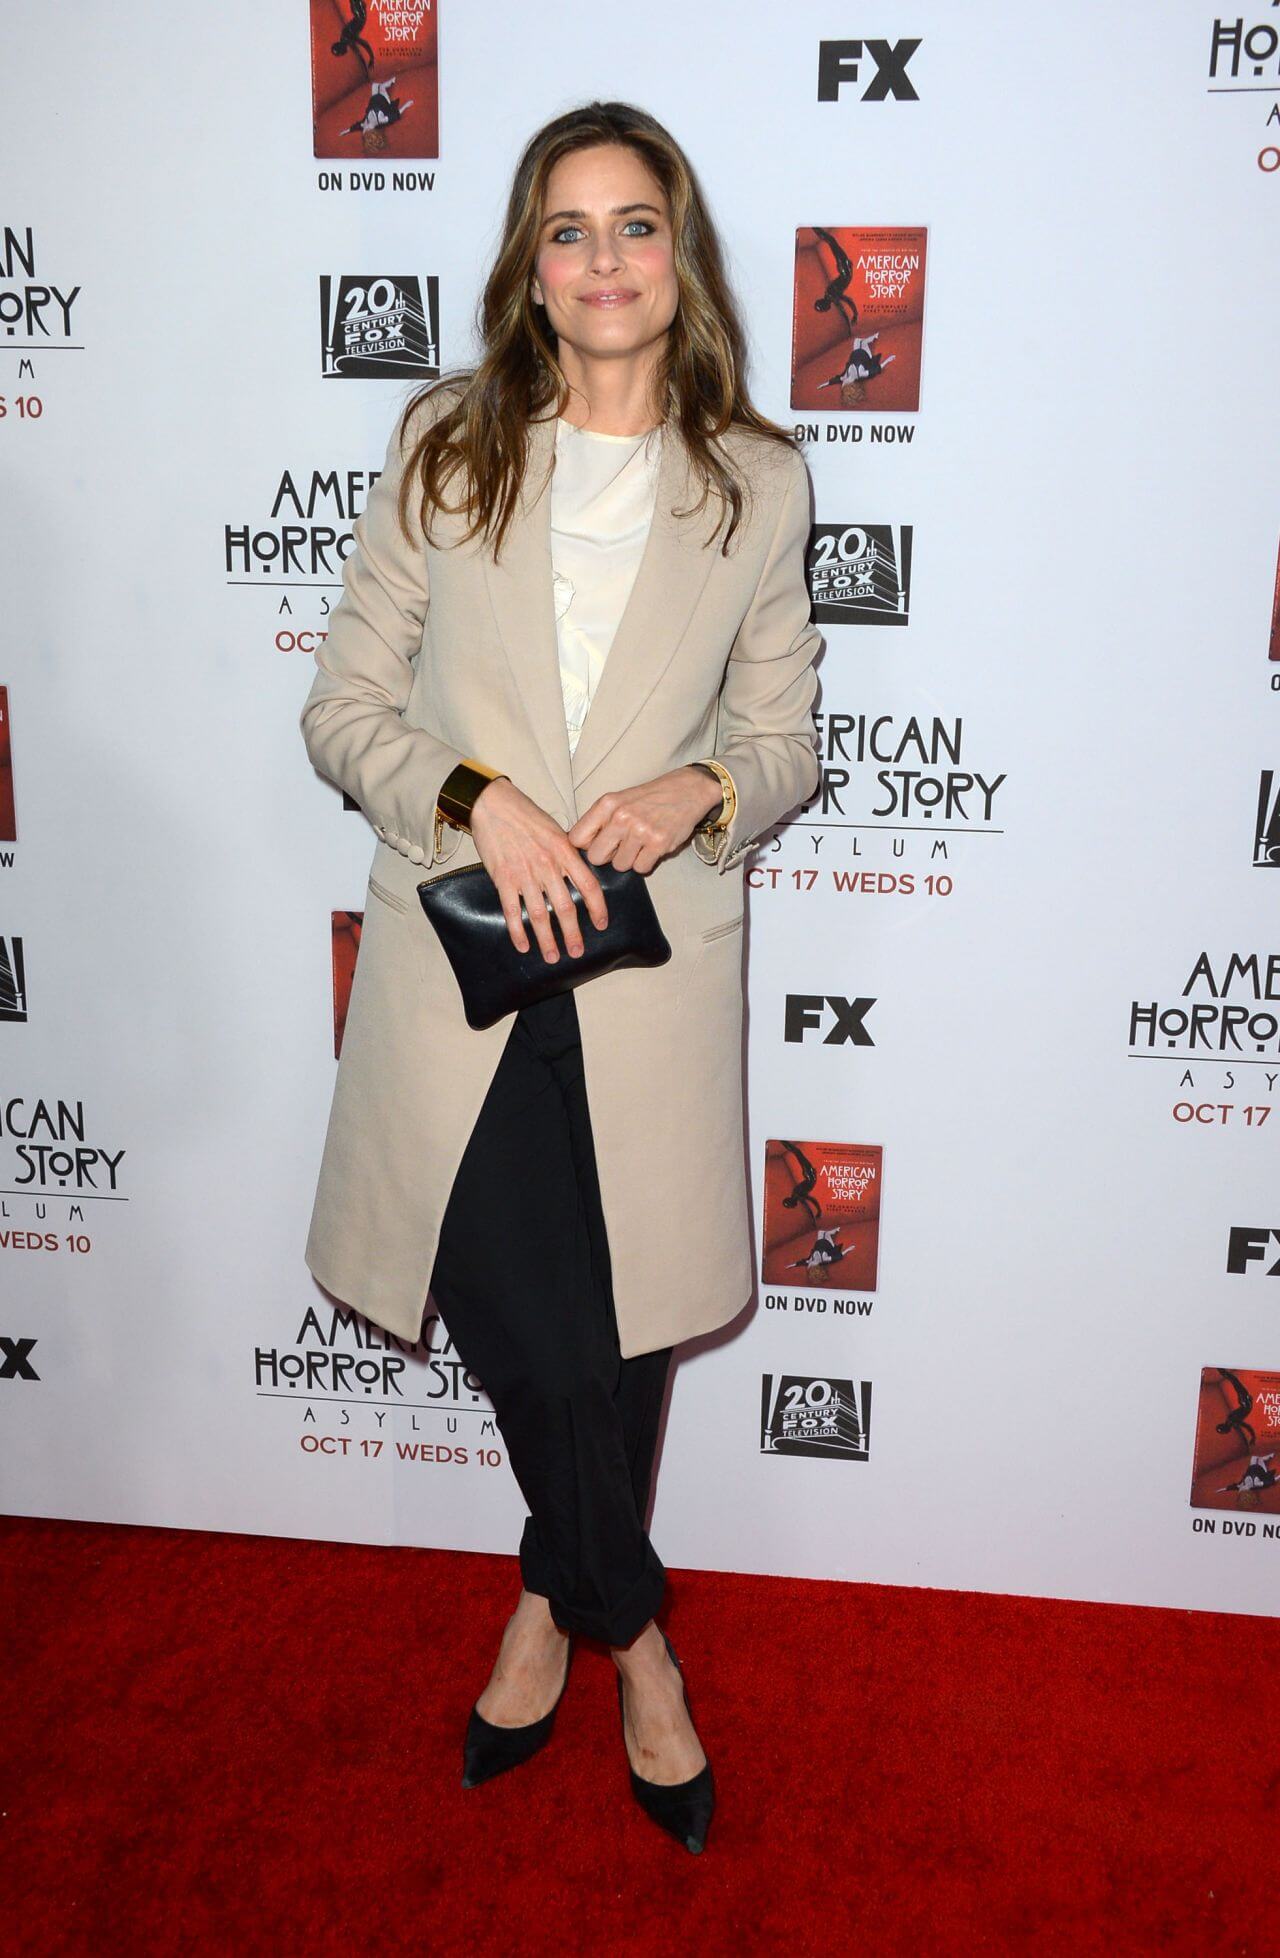 Amanda Peet In Golden Beige Long Coat & Off White Top With Black Pants At  FX’s “American Horror Story Asylum”